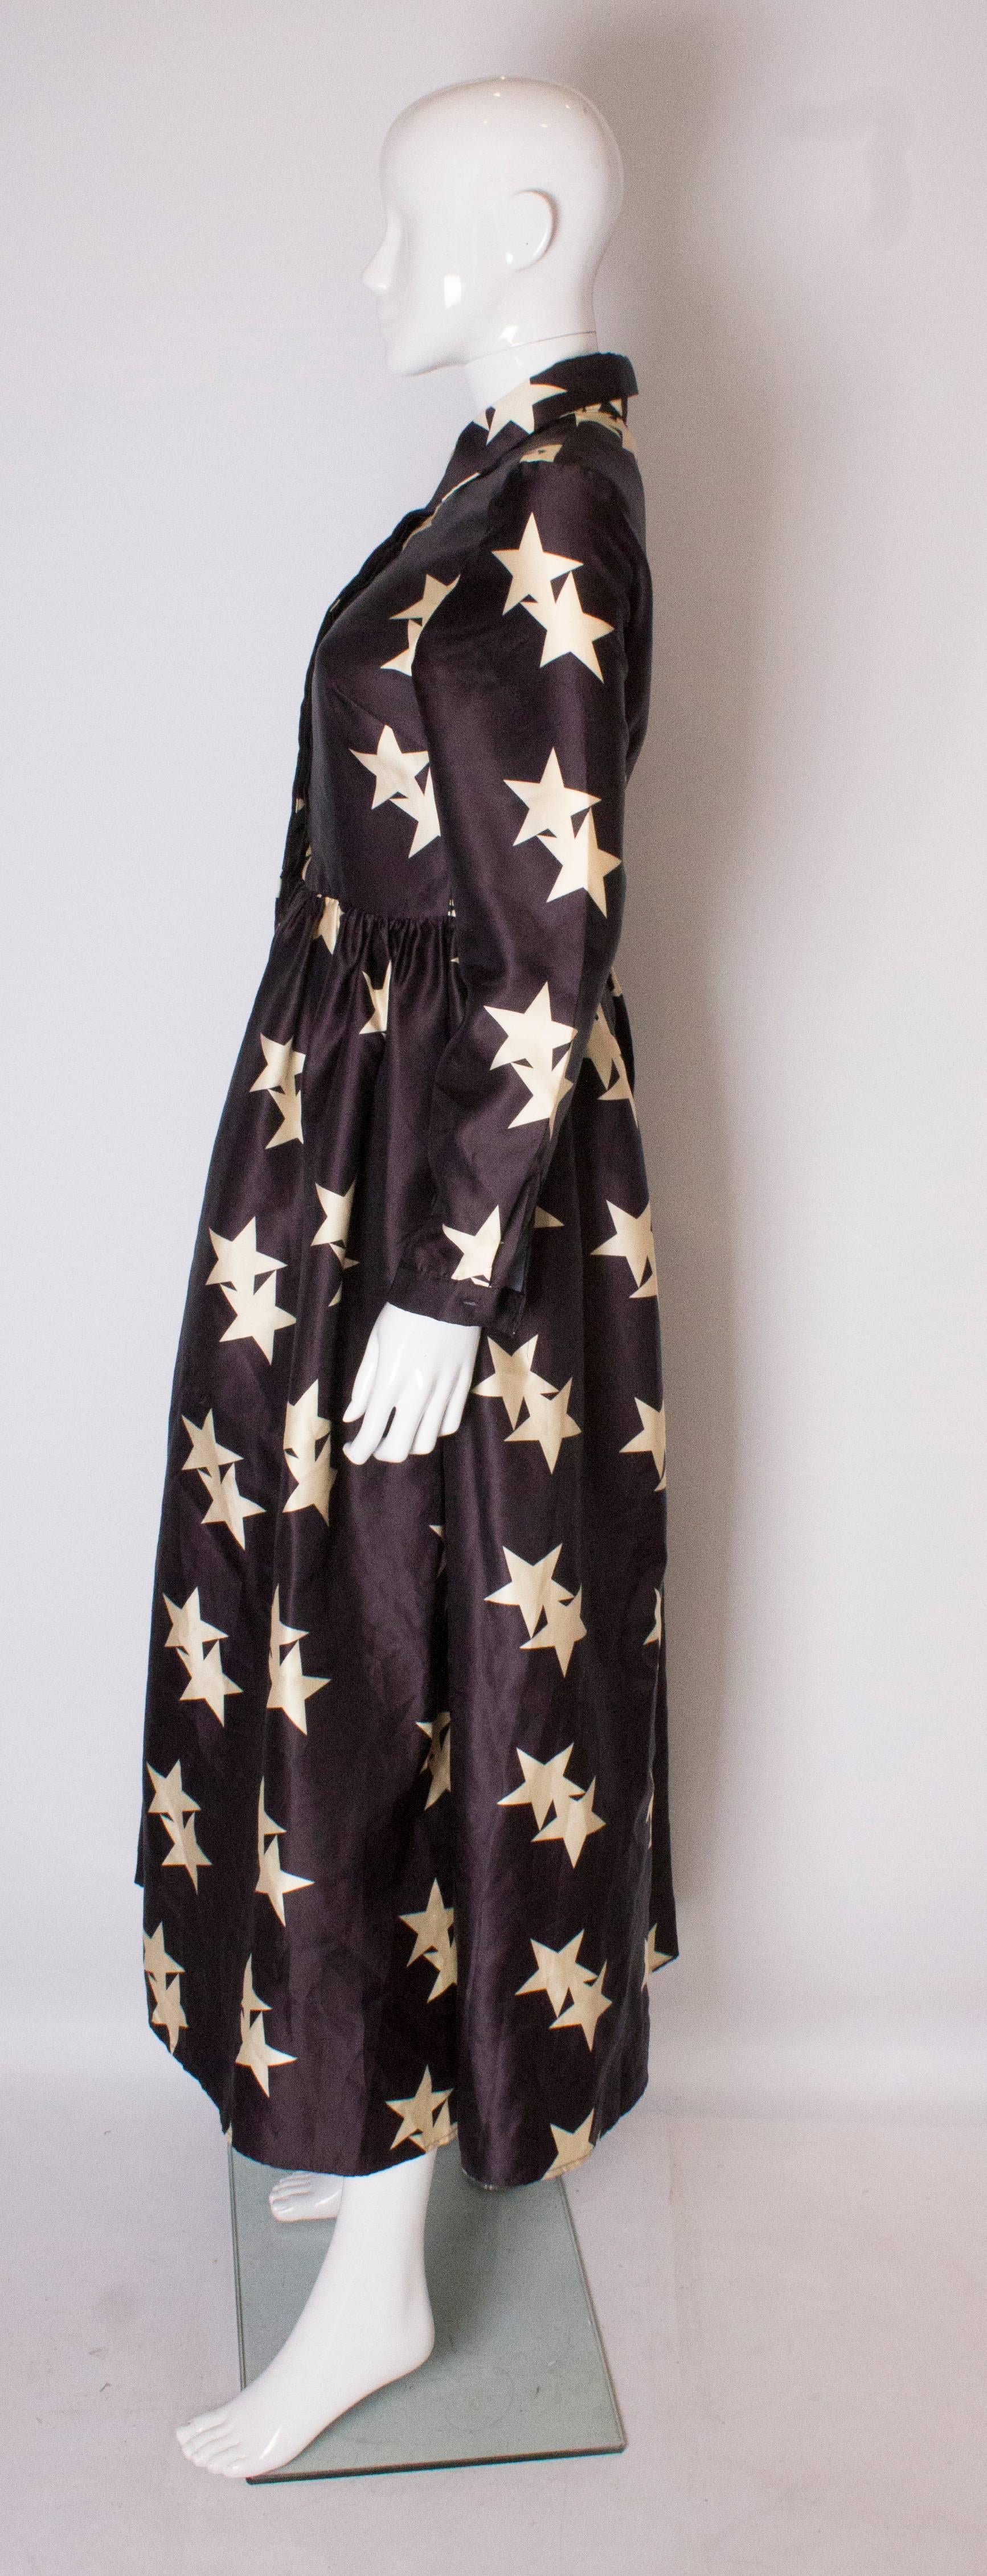 Women's Vintage Star Print Shirt Dress